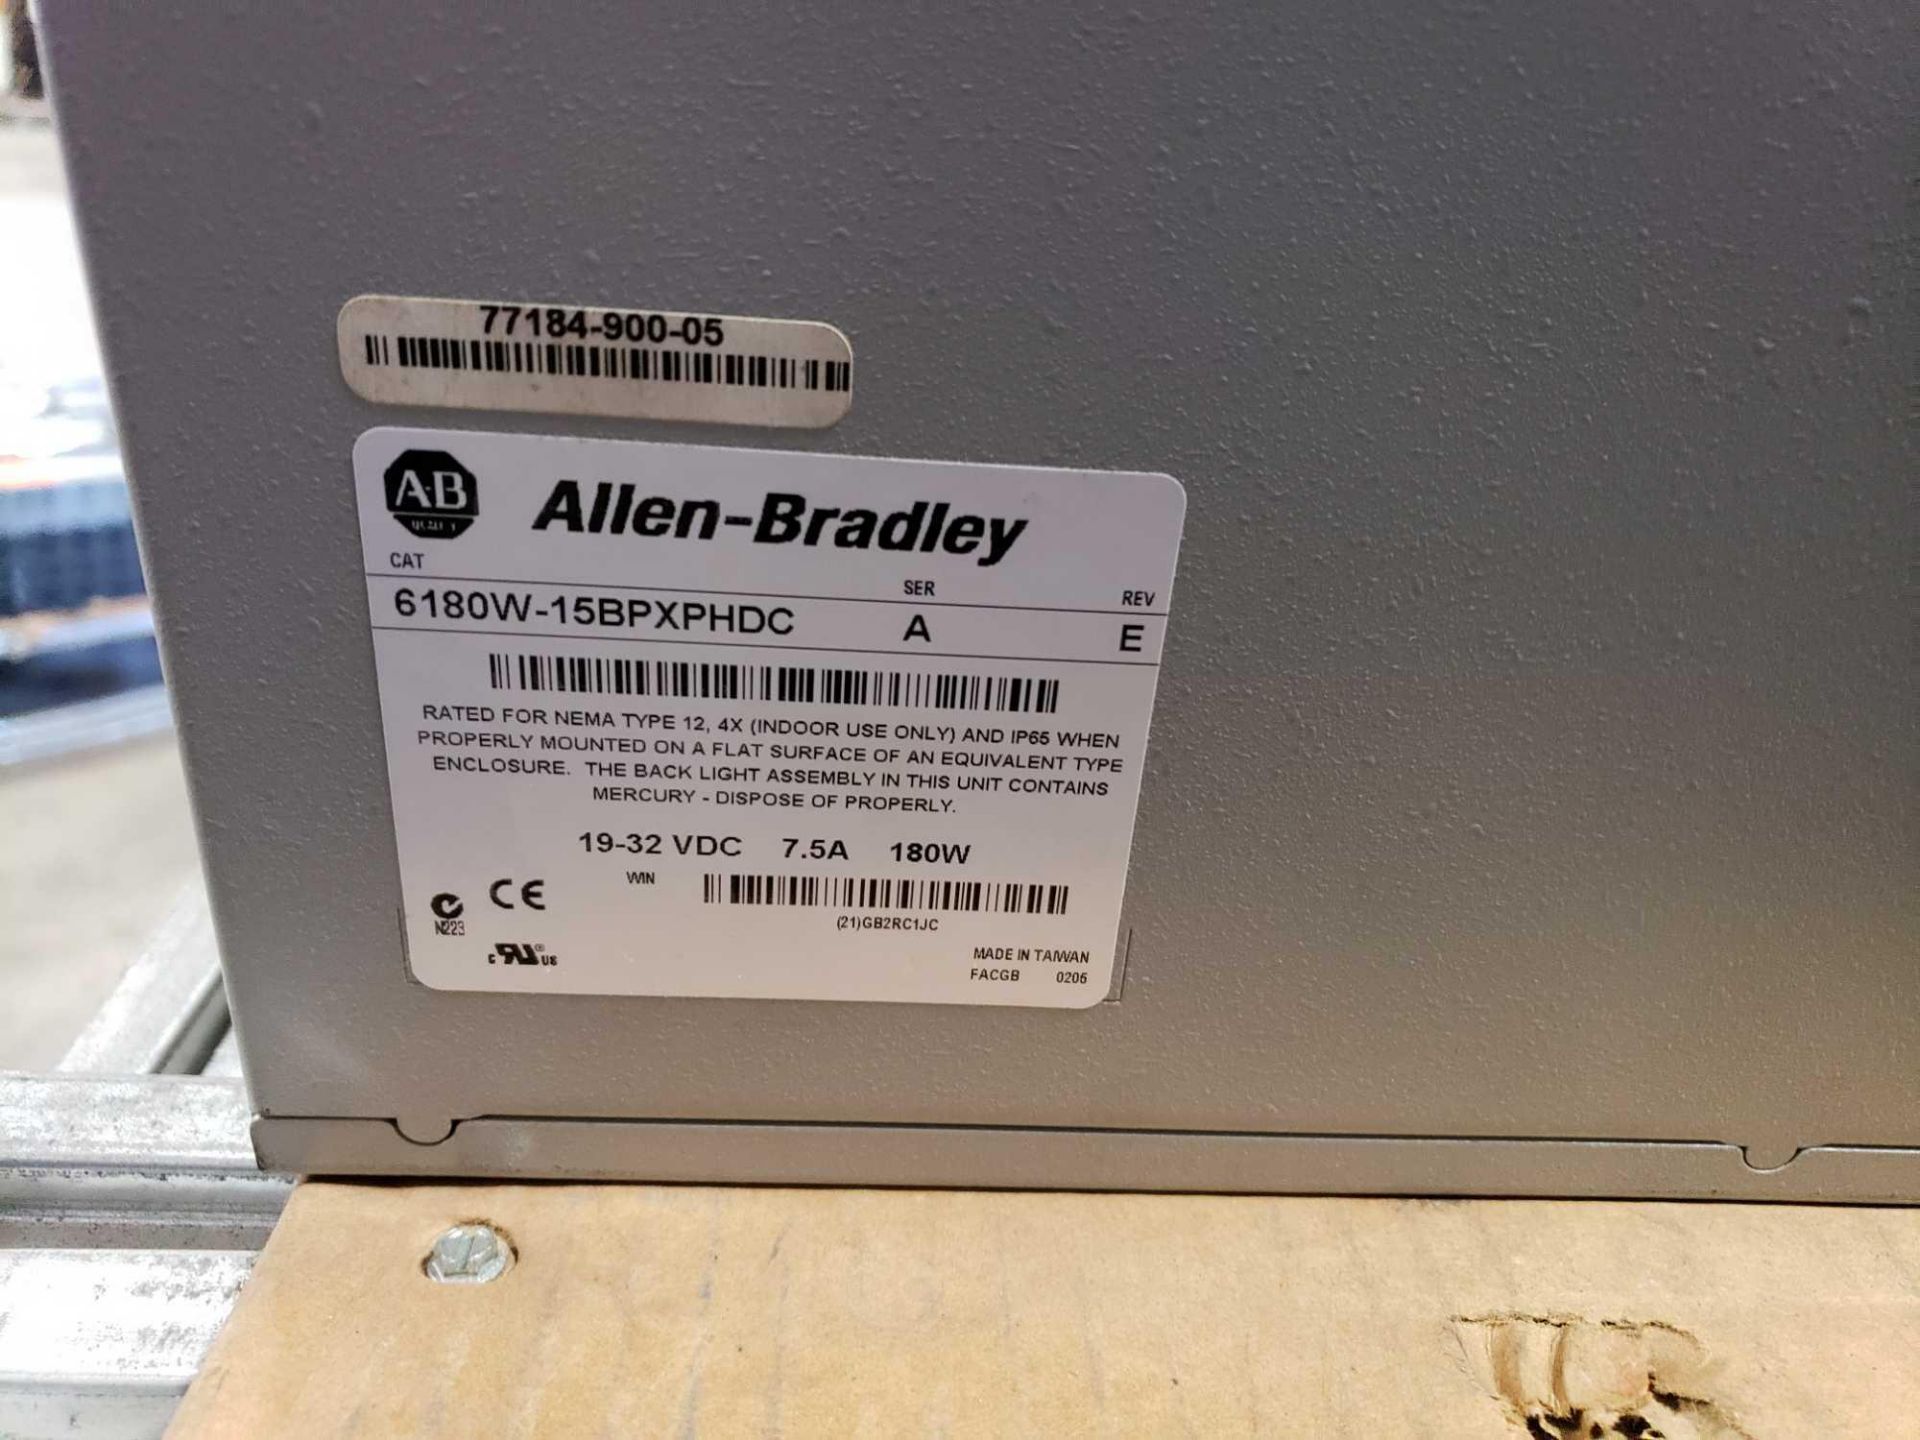 Allen Bradley Versaview 1500W catalog 6180W-15BPXPHDC user control interface. - Image 2 of 2